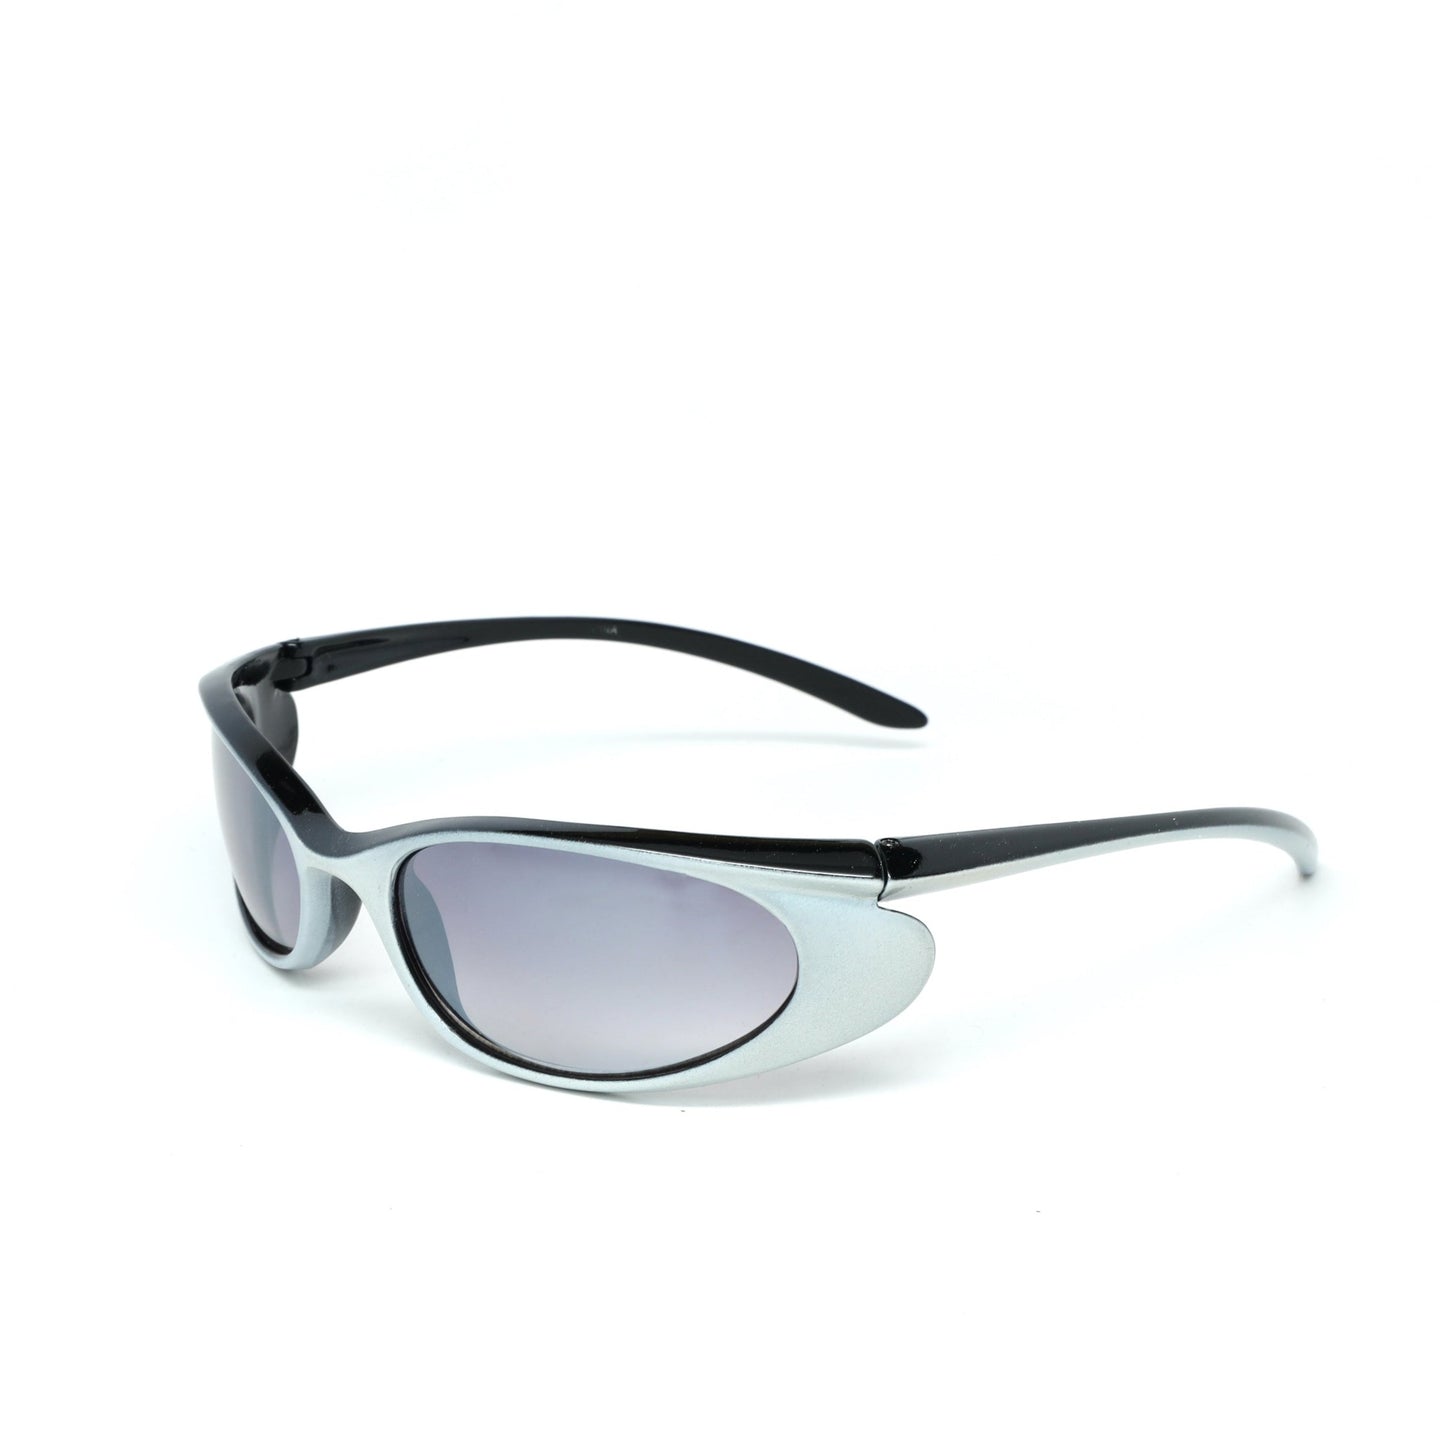 Prototype 2 Classic Hue Dual Colored Visor Sunglasses - Grey/Black